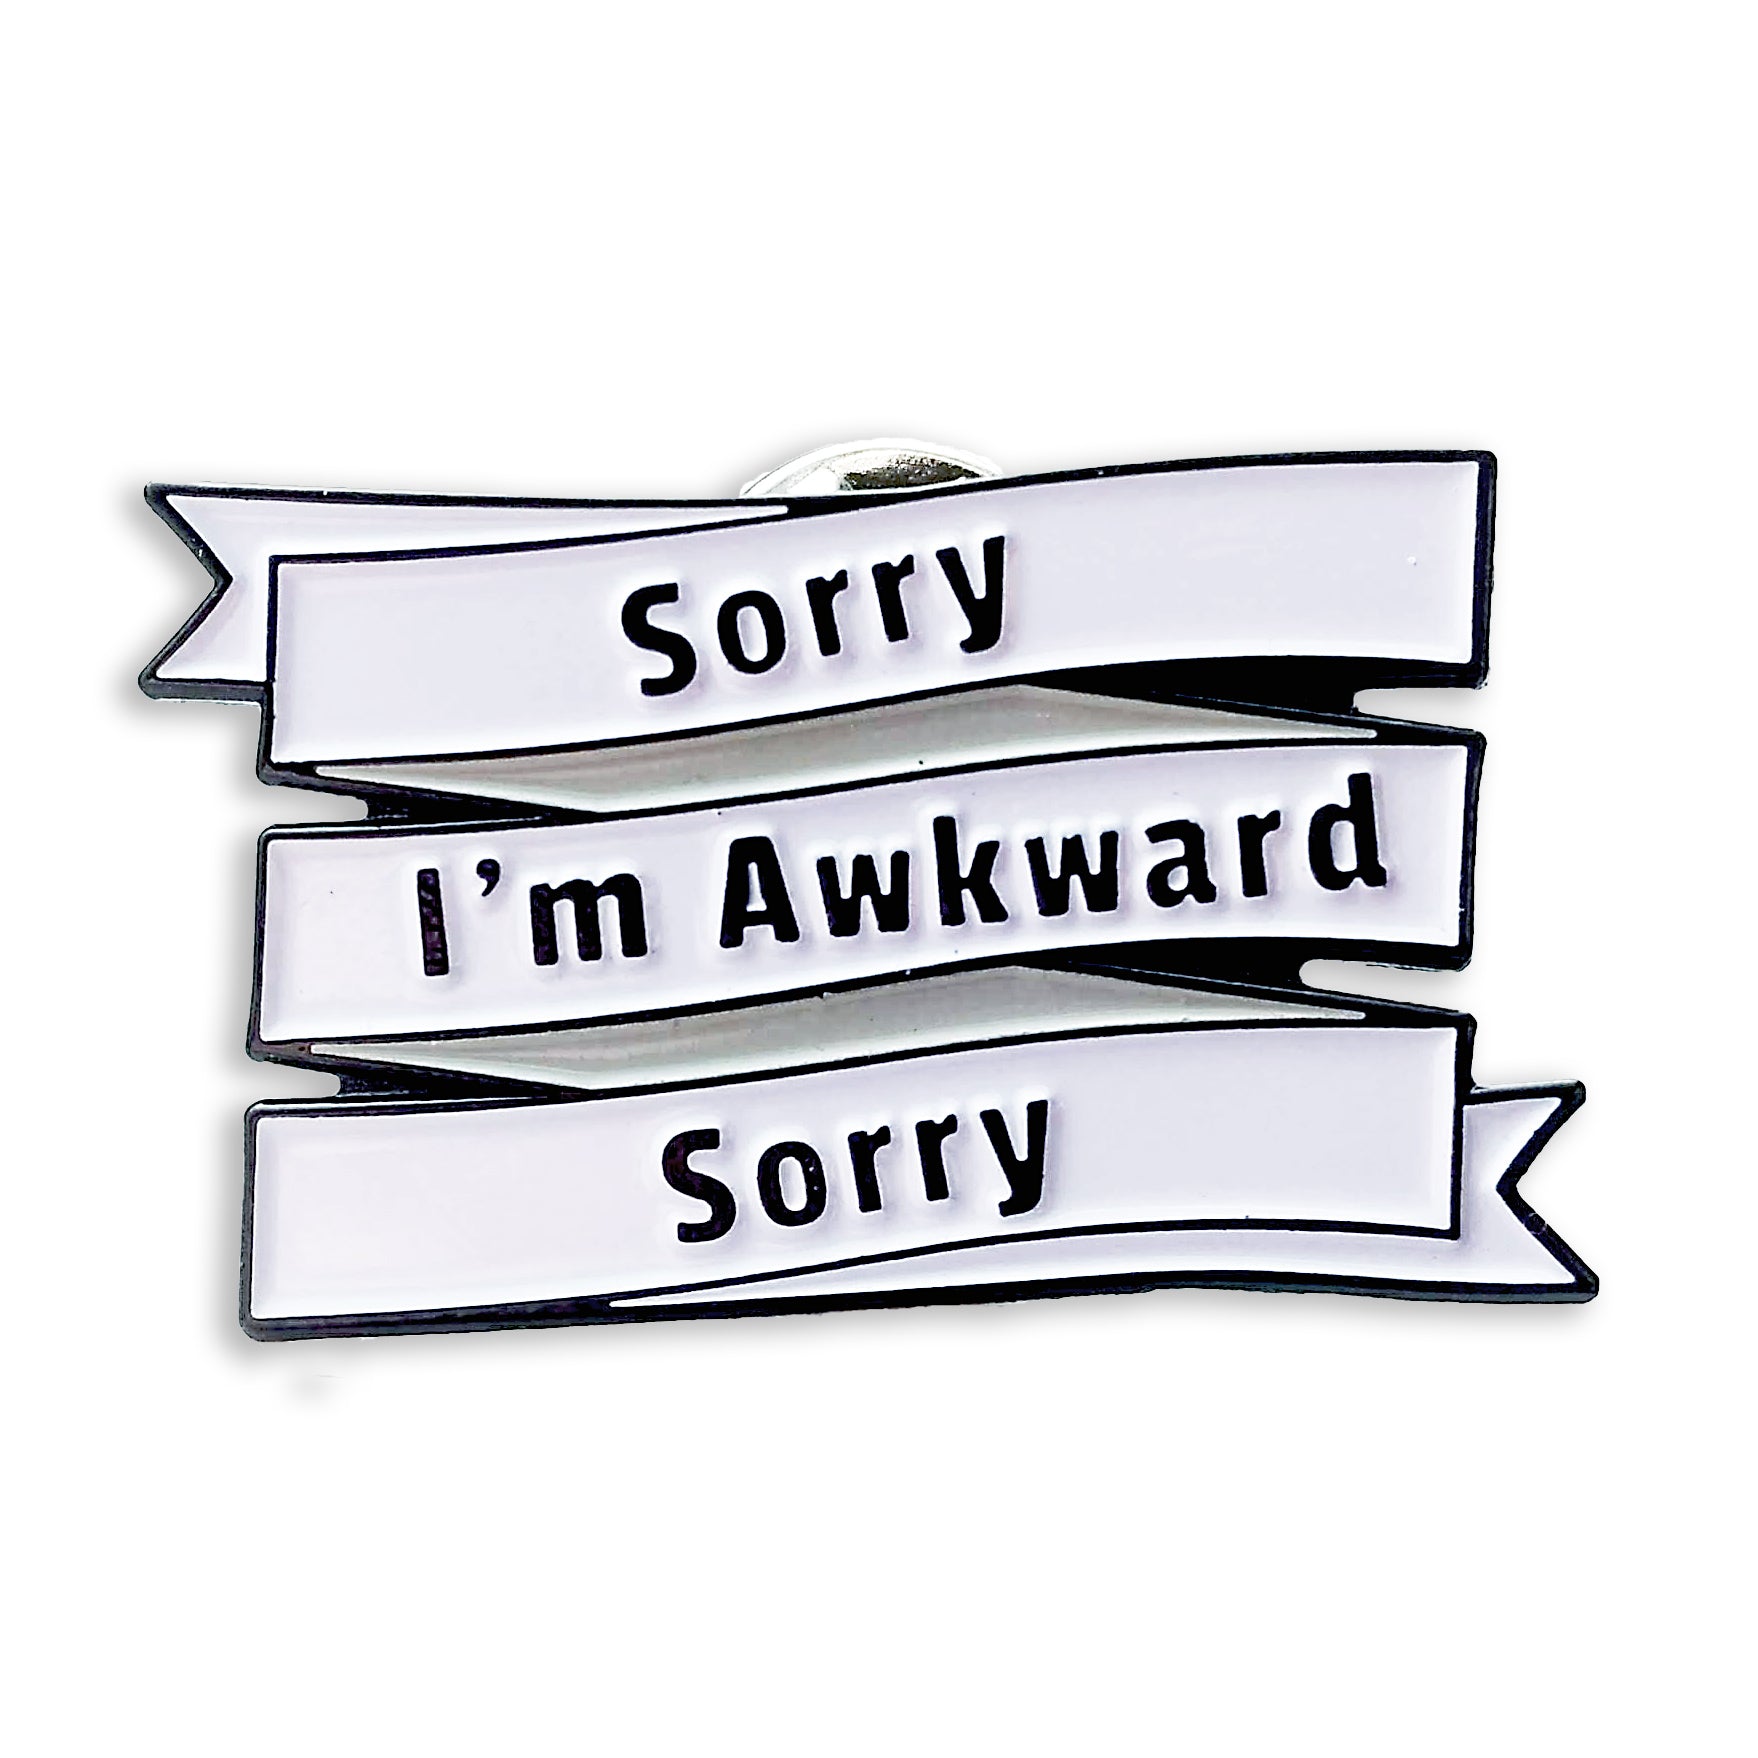 Enamel Pin that says Sorry I'm Awkward Sorry